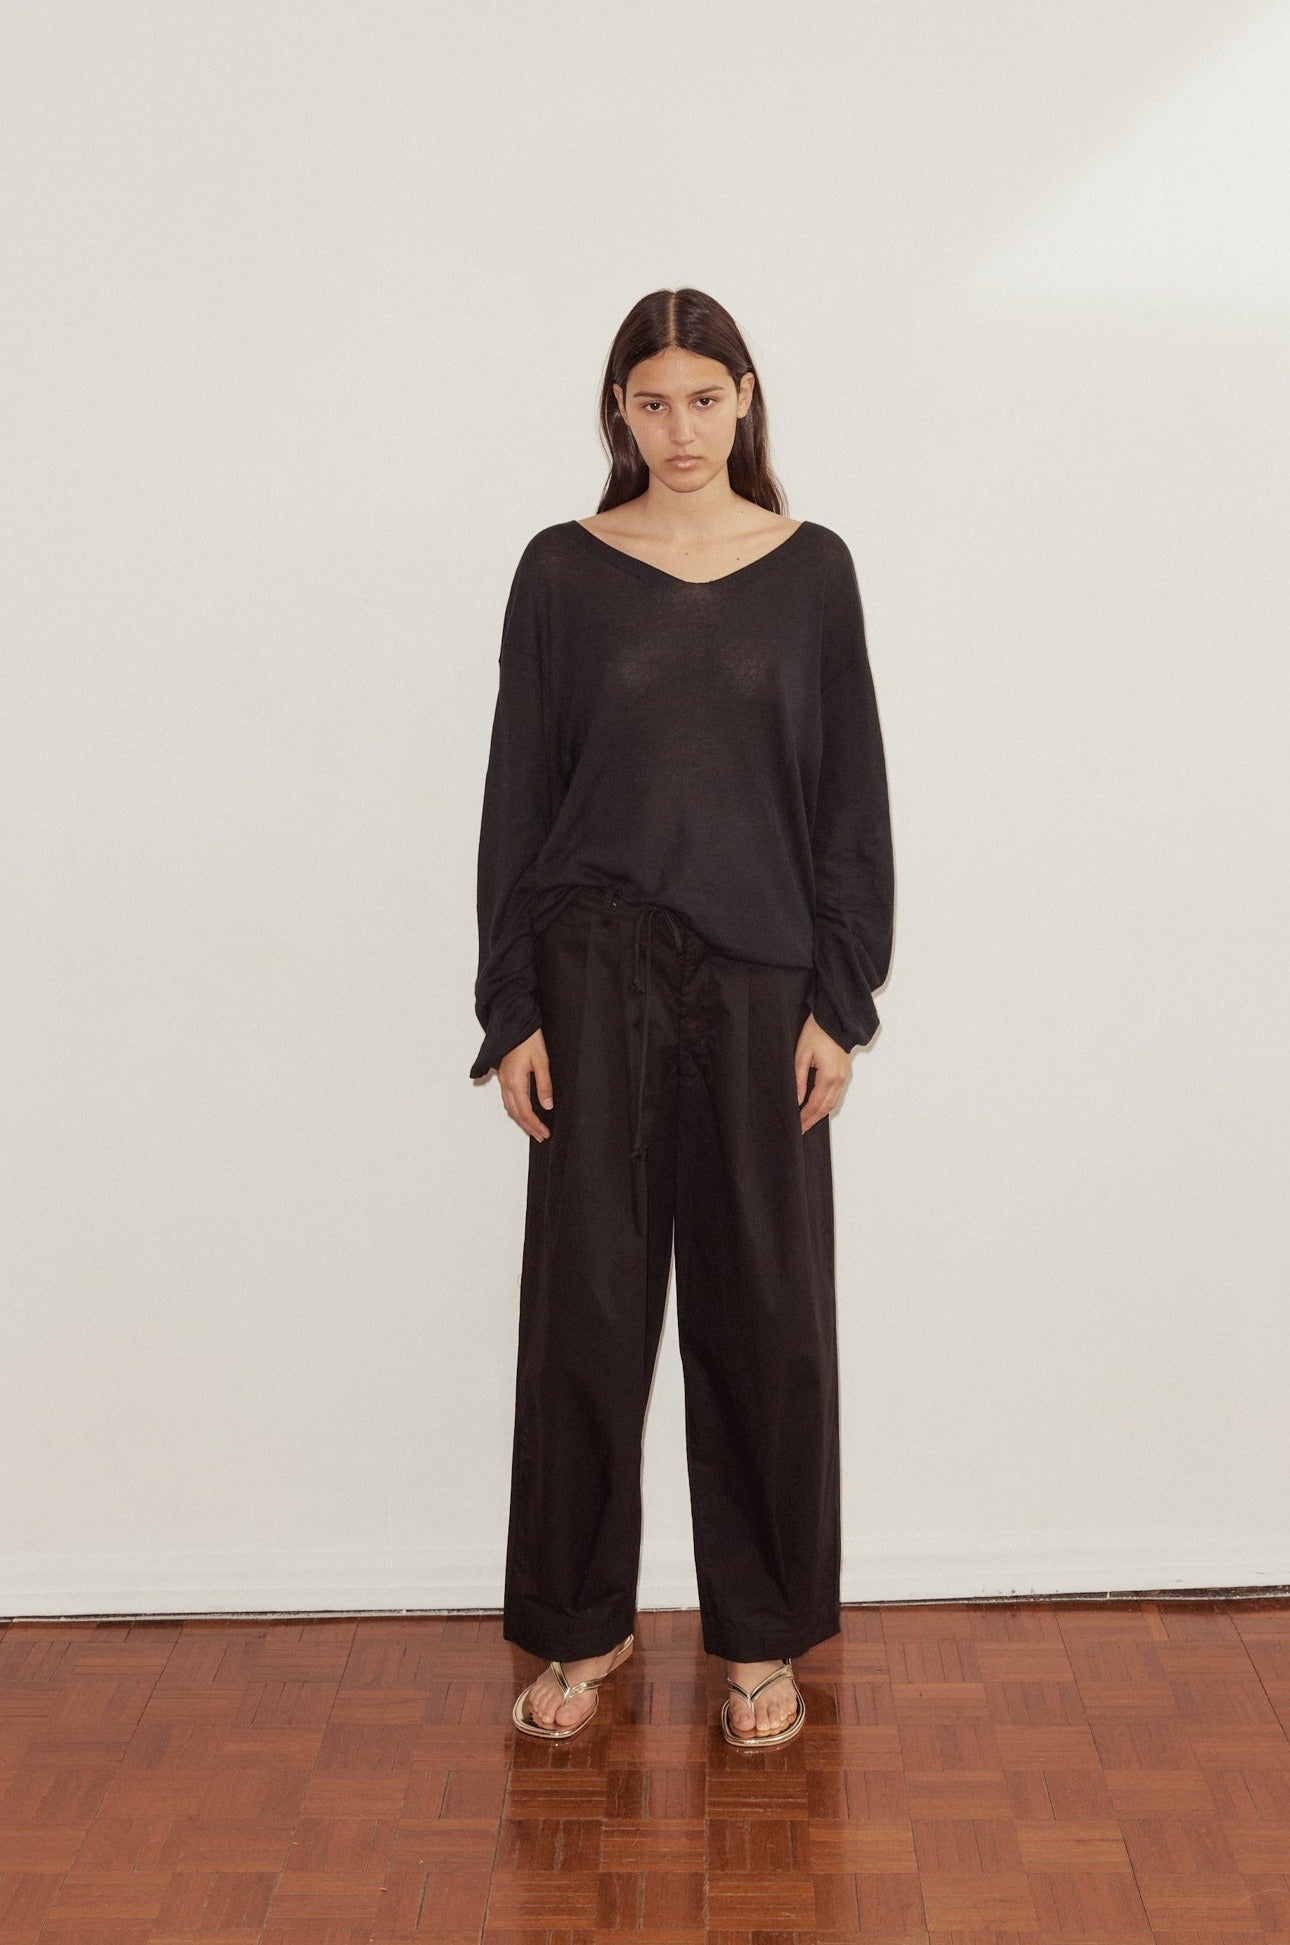 Female model wearing Loose Long Sleeve Knitted Top - Black by Deiji Studios against plain background